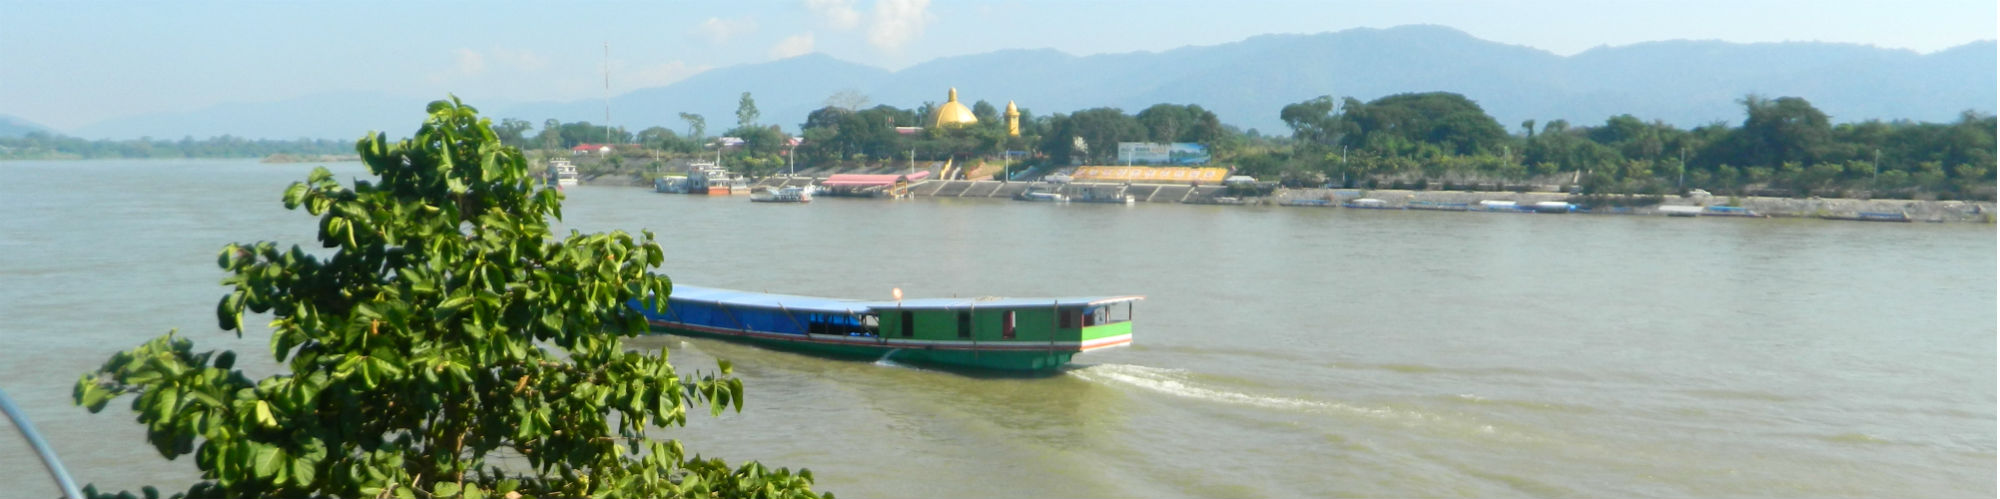 Mekong River at Sob Ruak (Golden Triangle), Chiang Rai Province